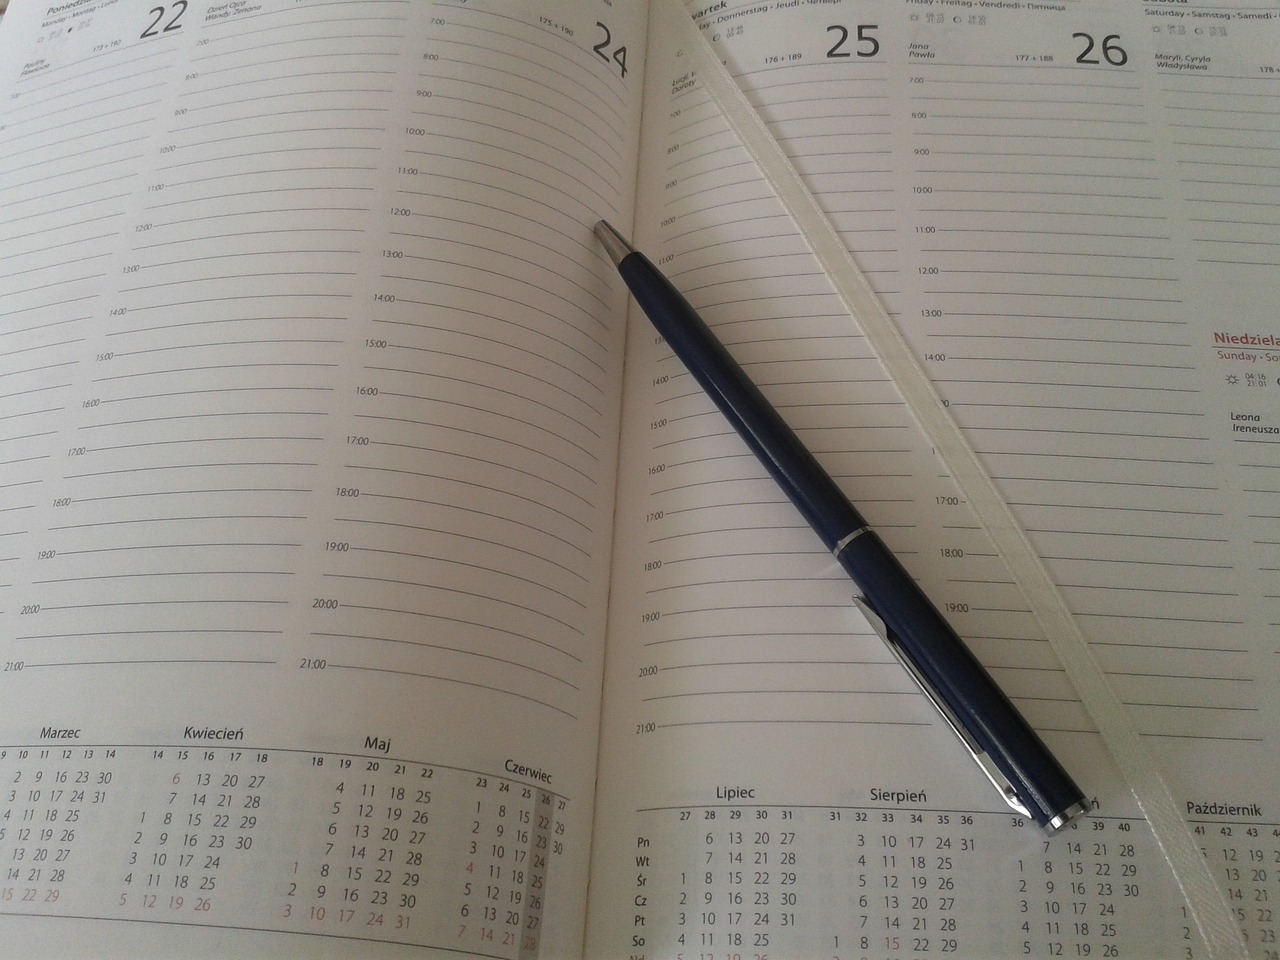 A calendar or an organizer